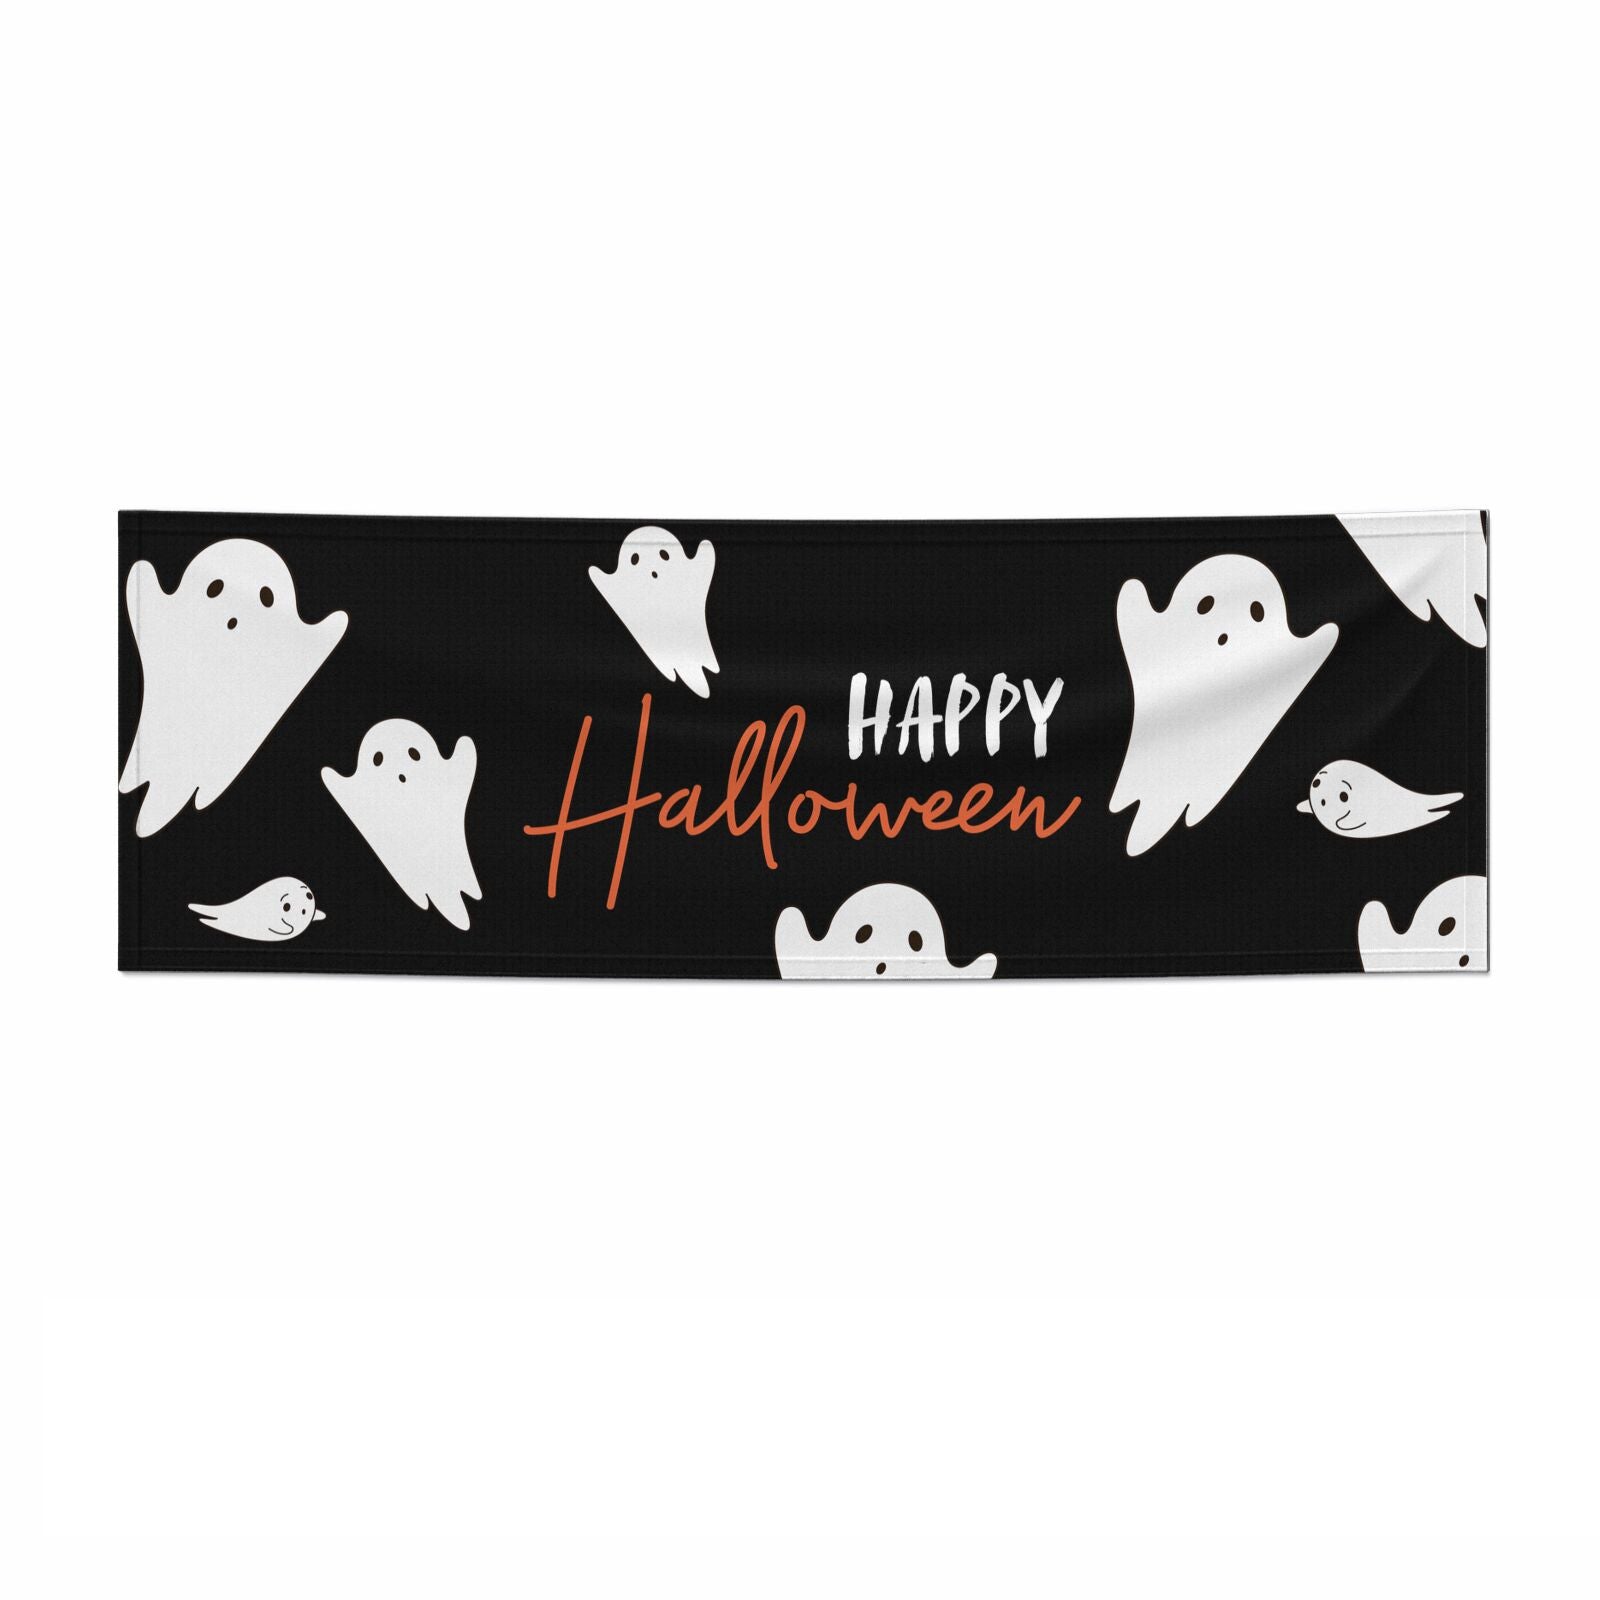 Happy Halloween Ghost Pattern 6x2 Paper Banner